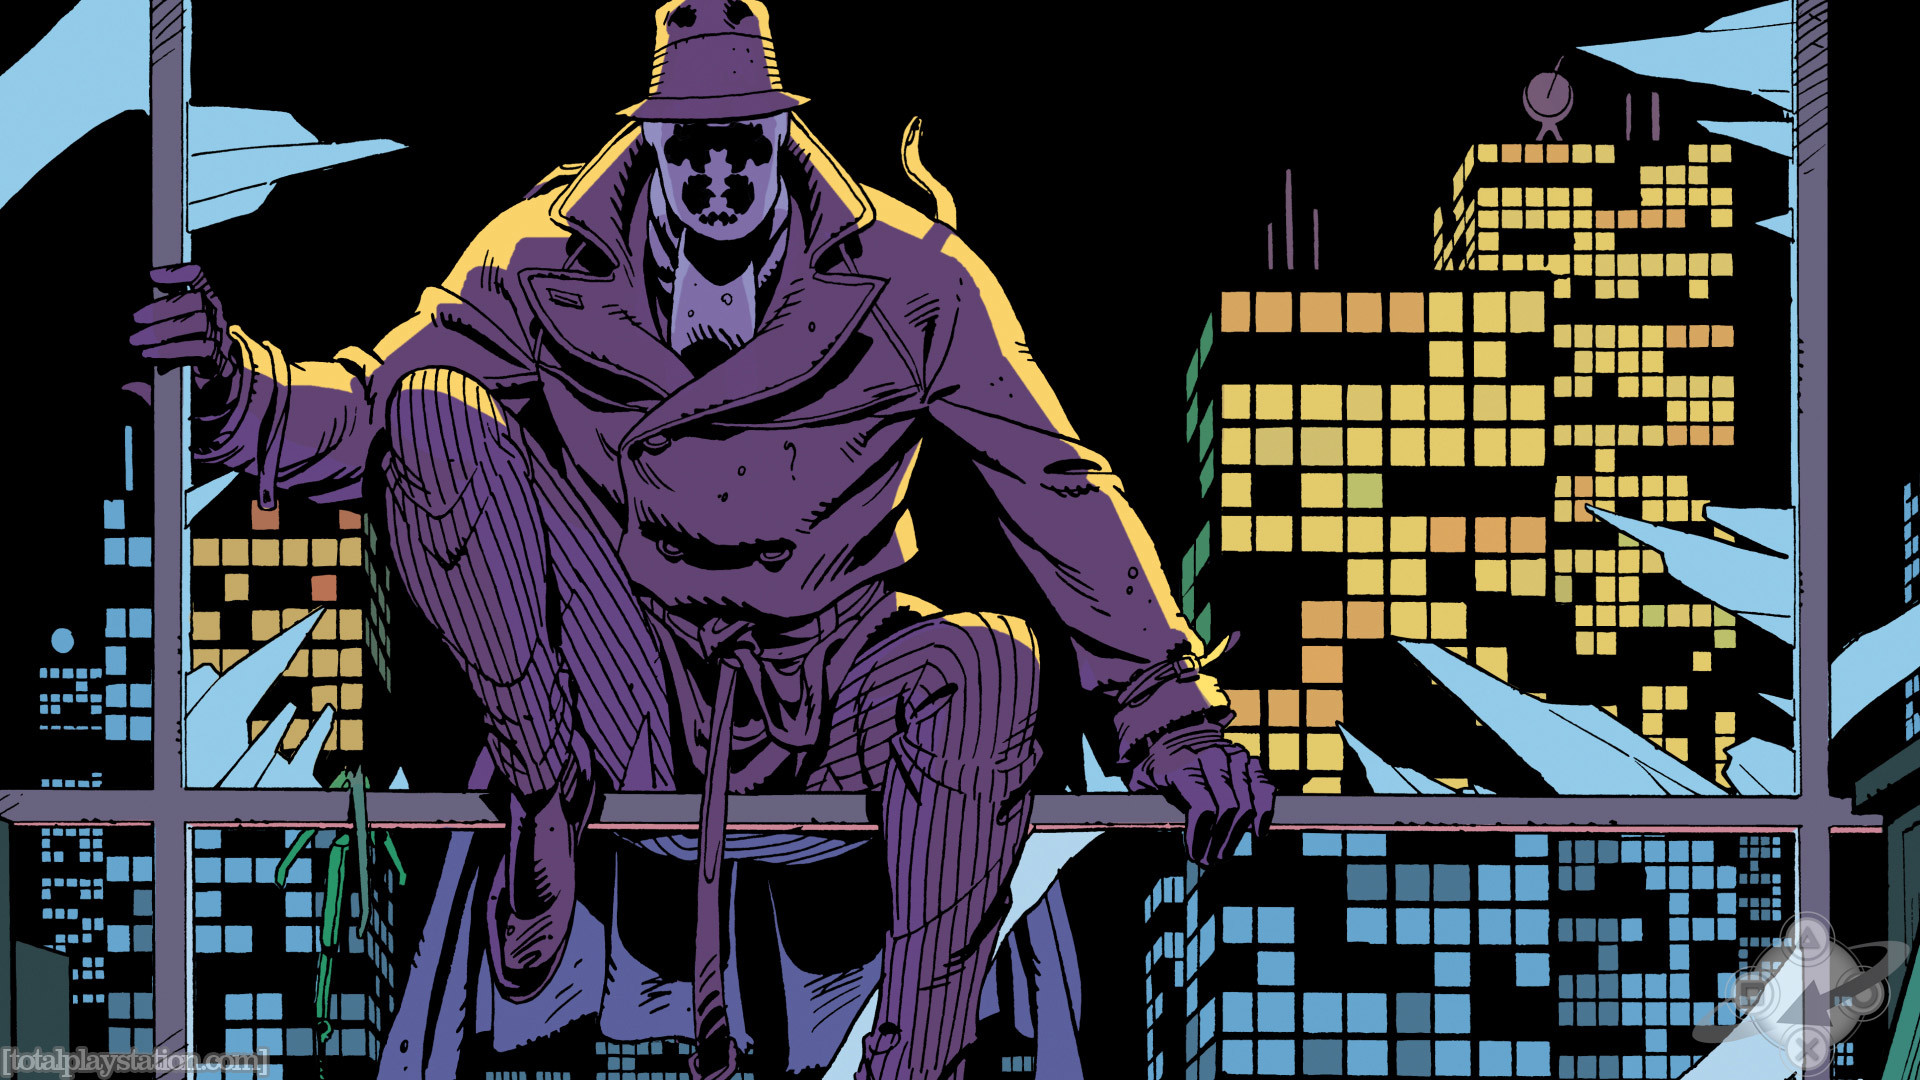 watchmen wallpaper hd,fictional character,supervillain,fiction,comics,illustration